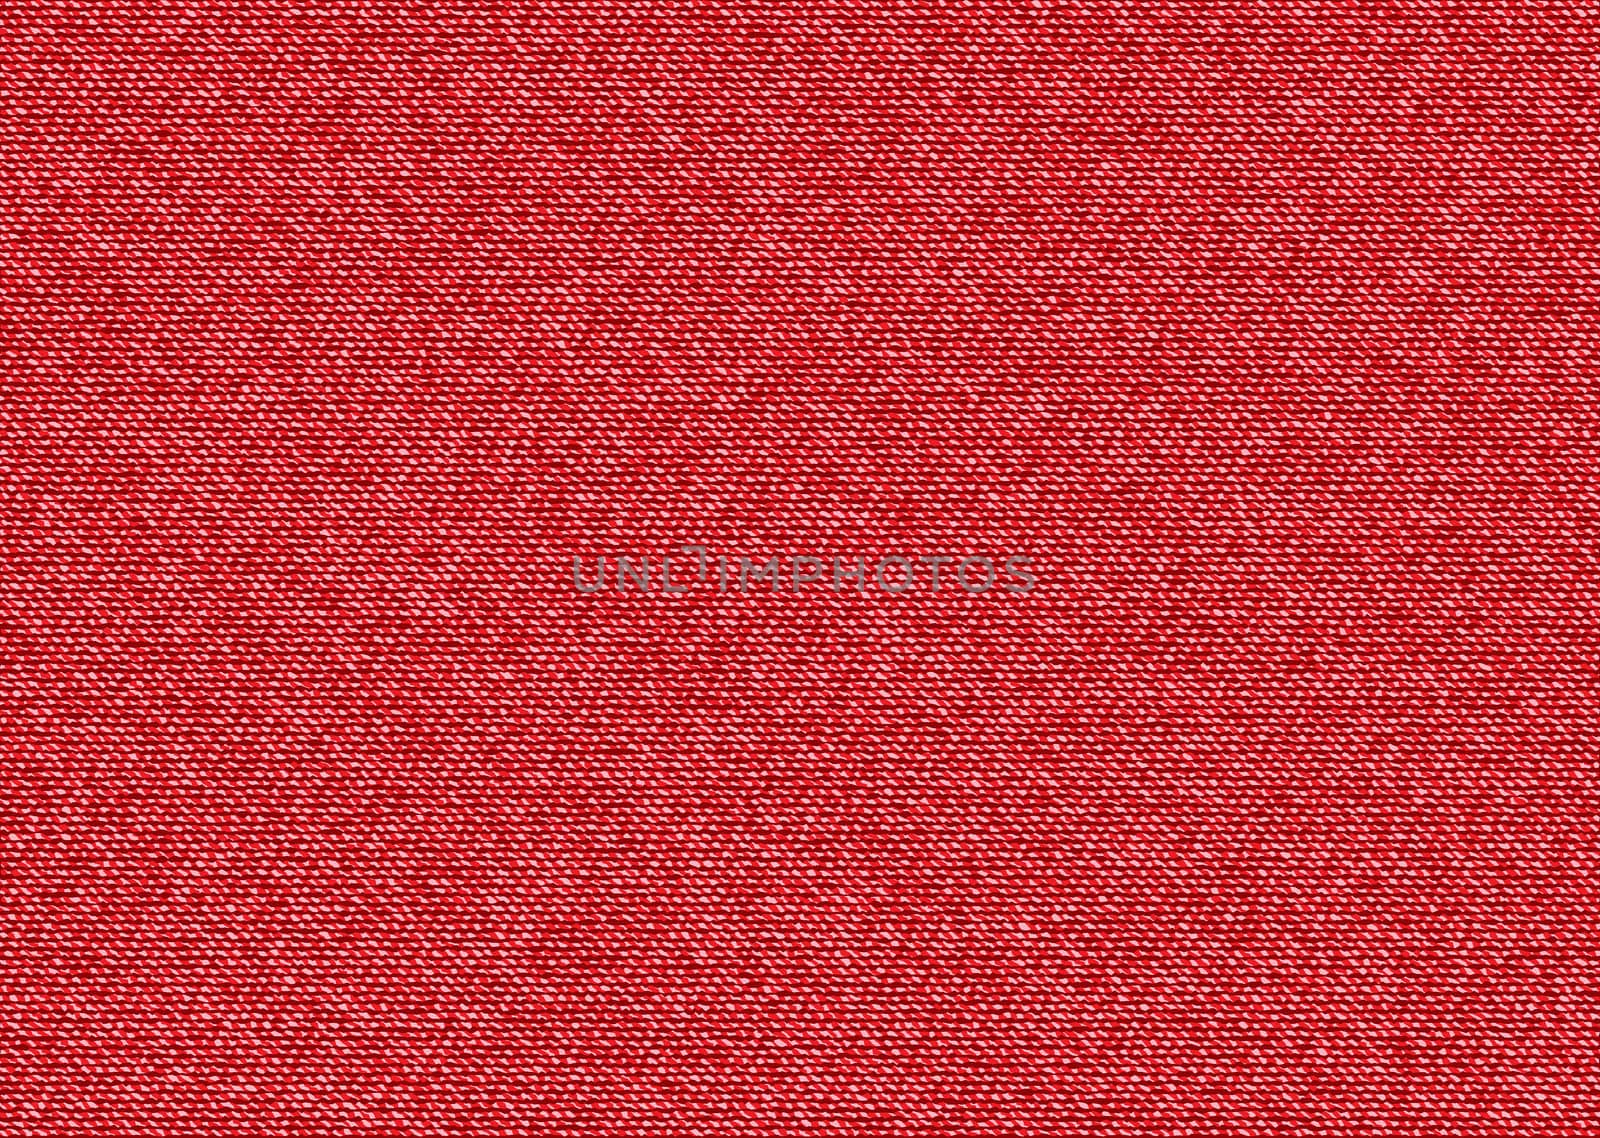 Red denim background by nicemonkey